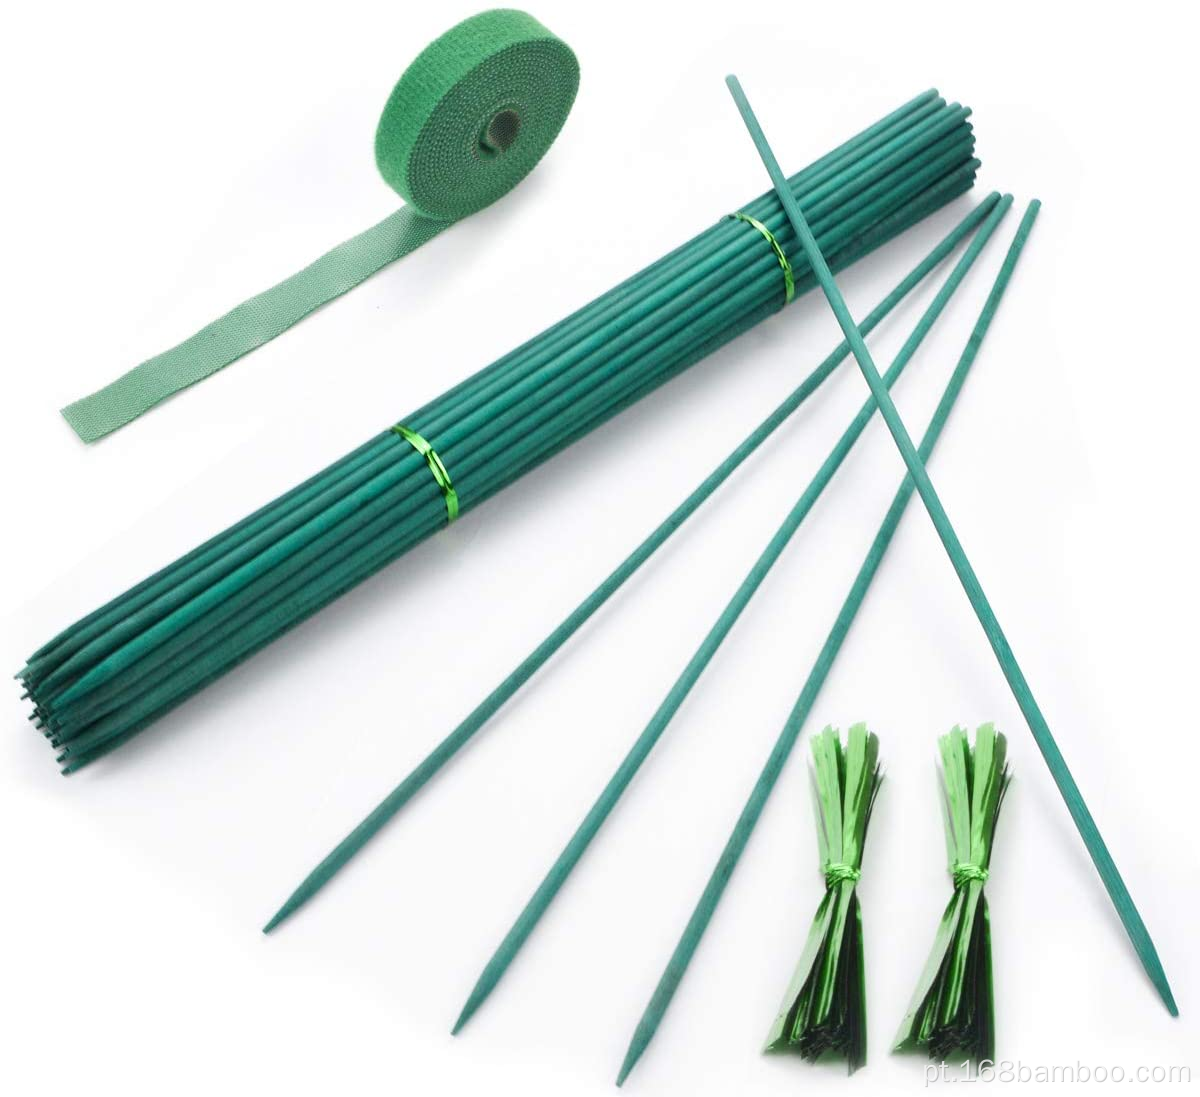 A estaca de planta verde suporte a planta floral de suporte de bambu